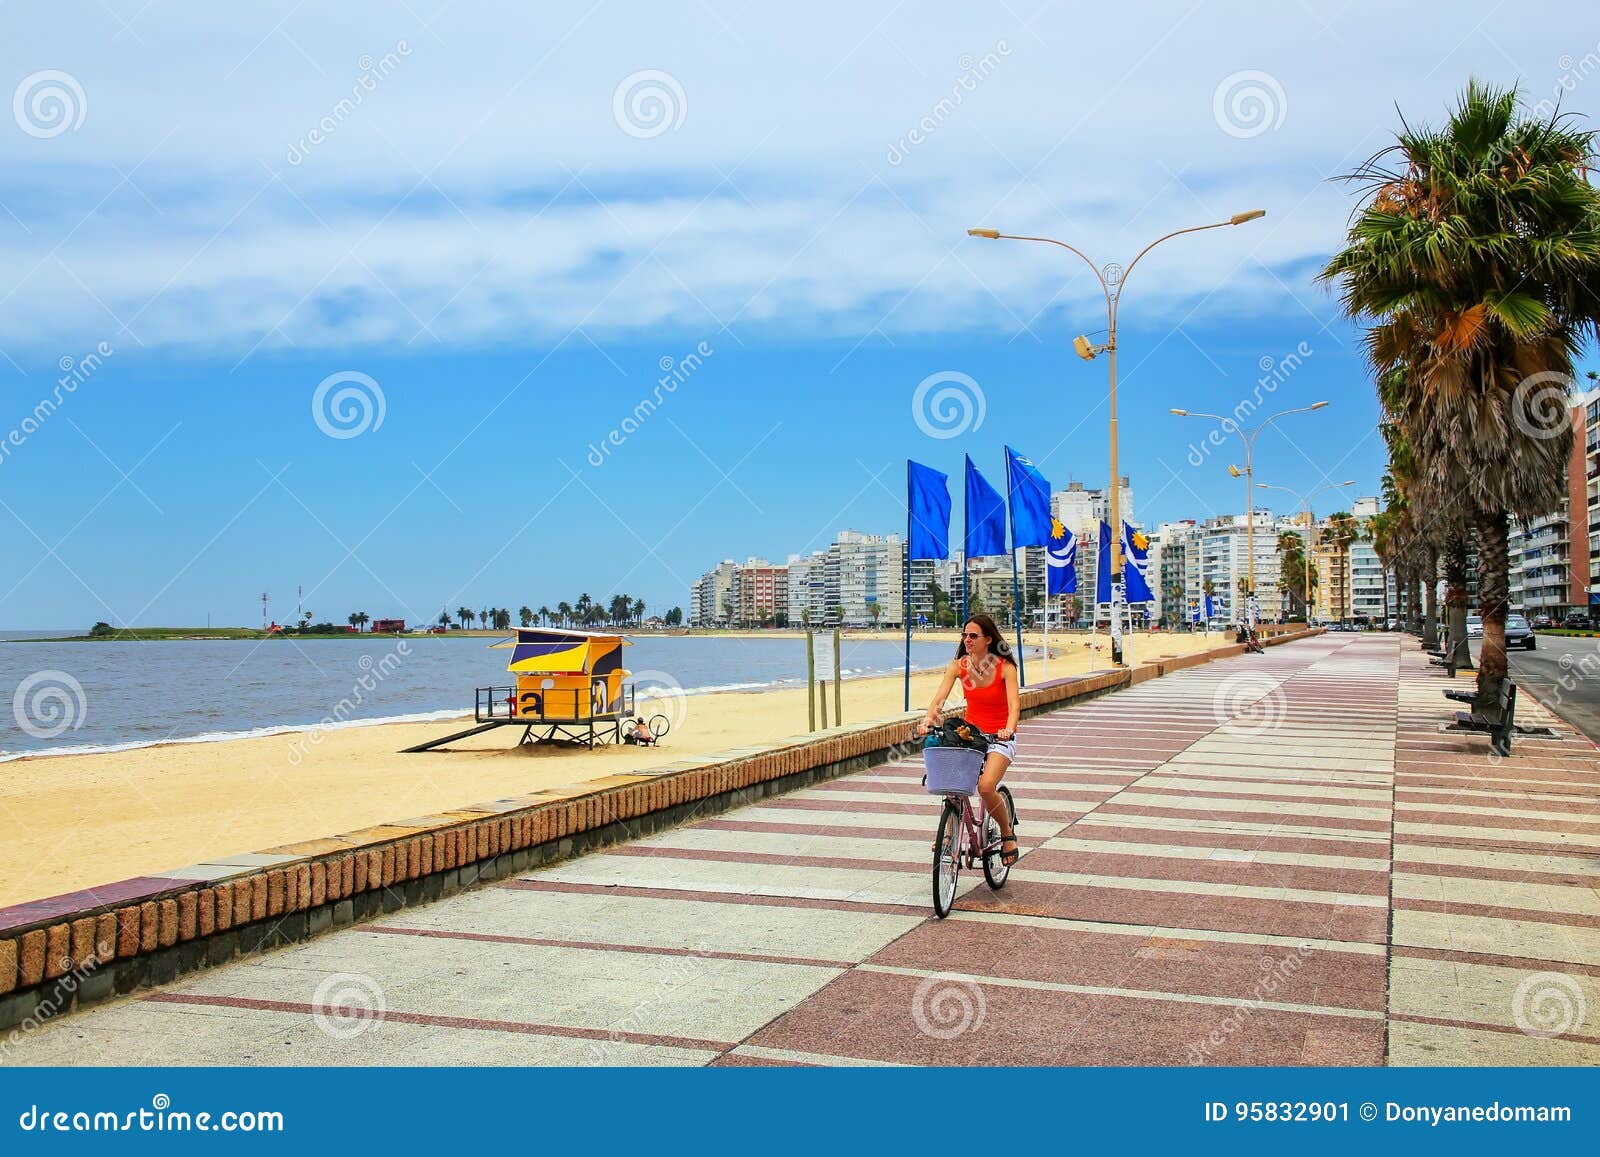 woman biking on the boulevard along pocitos beach in montevideo,